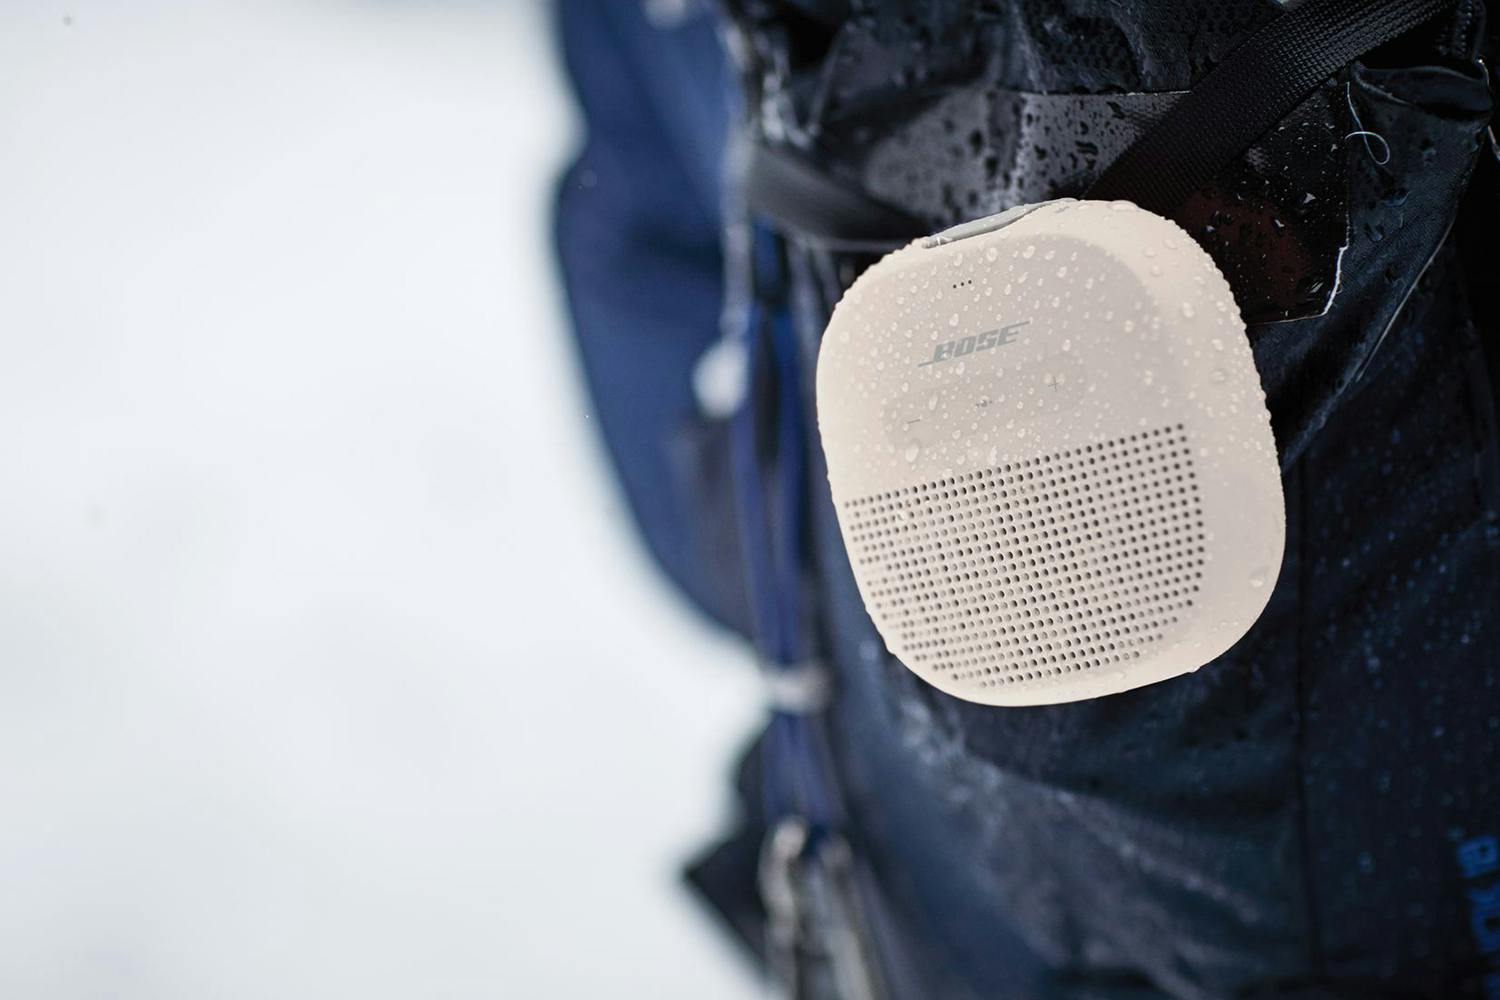 Bose SoundLink Micro Bluetooth Speaker | White Smoke